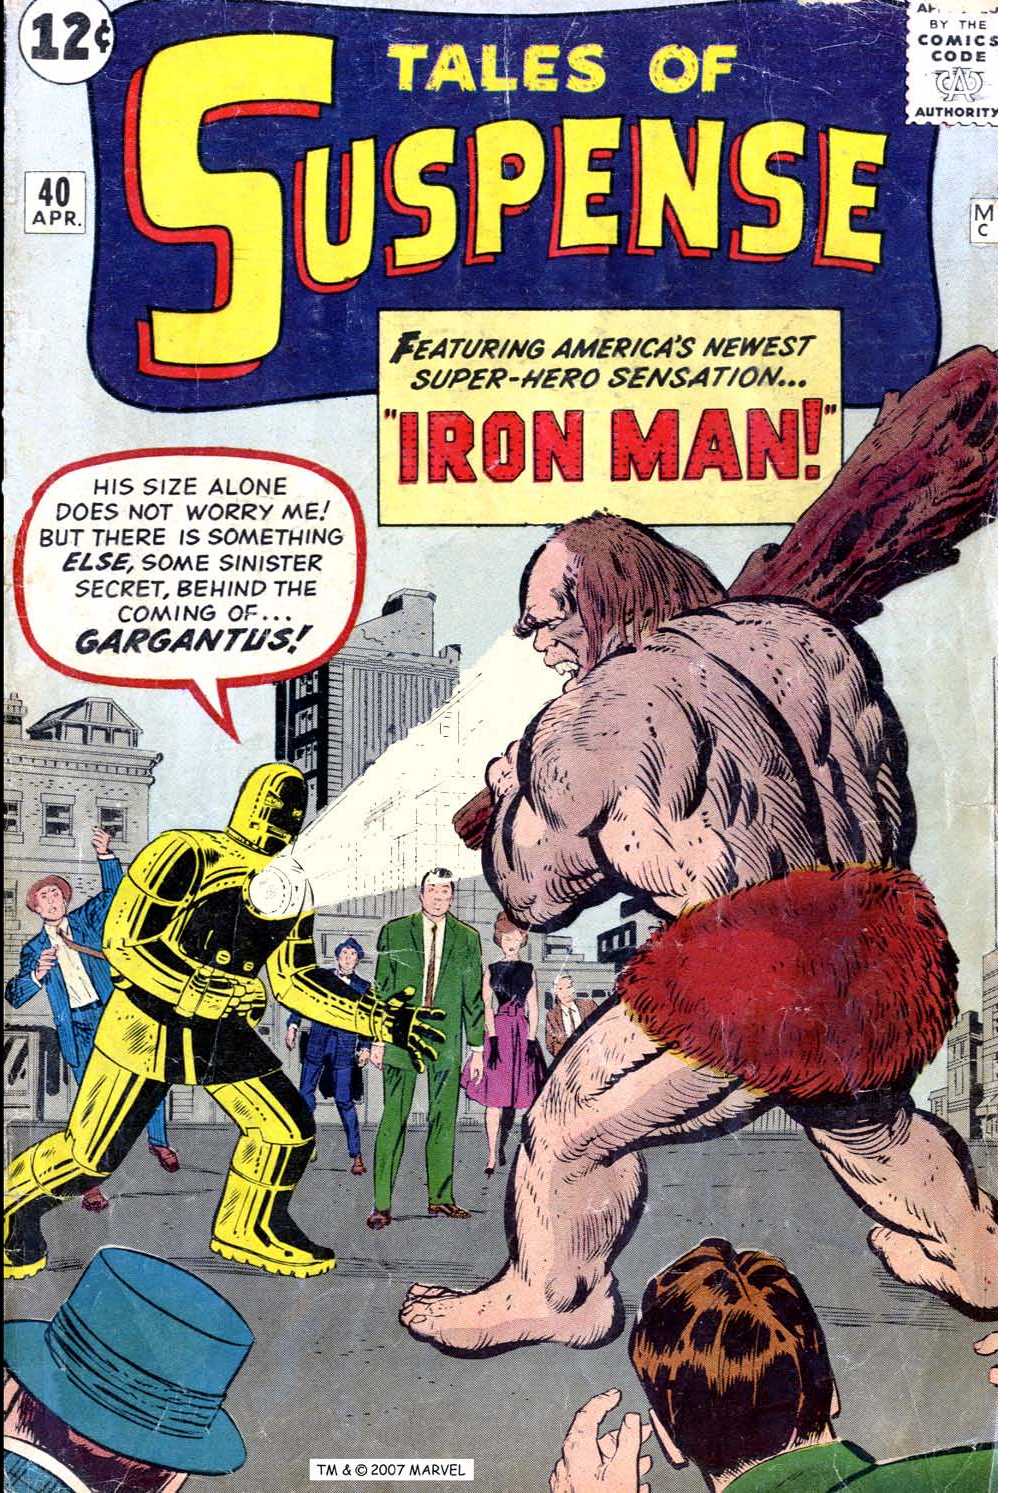 Tales of Suspense #40 (April 1963) cover